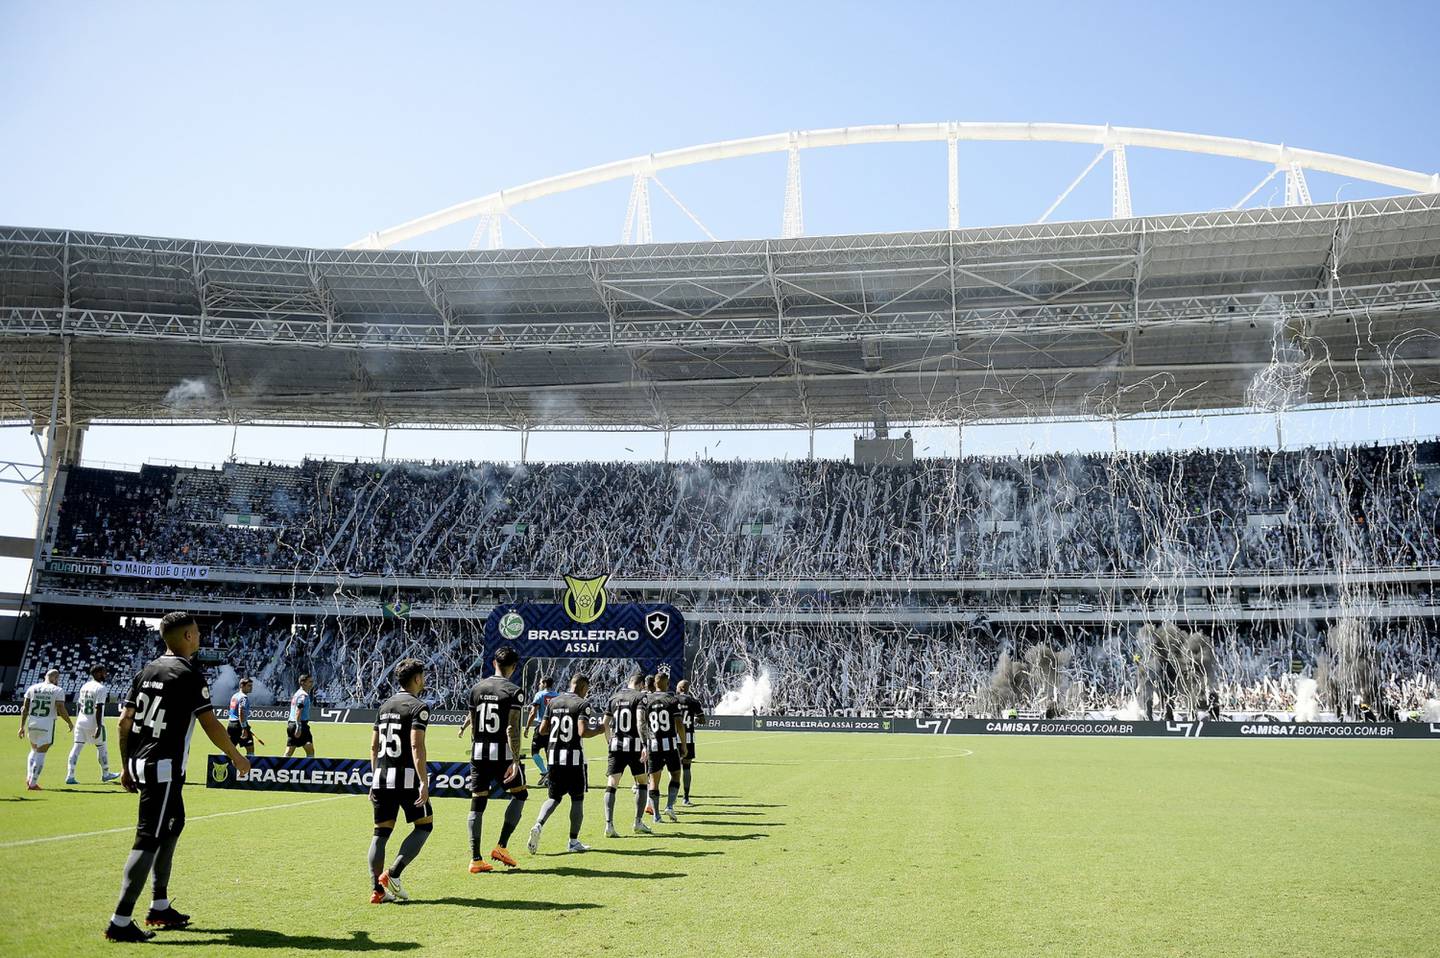 Players of Botafogo enter the field before a match in Rio de Janeiro, Brazil.